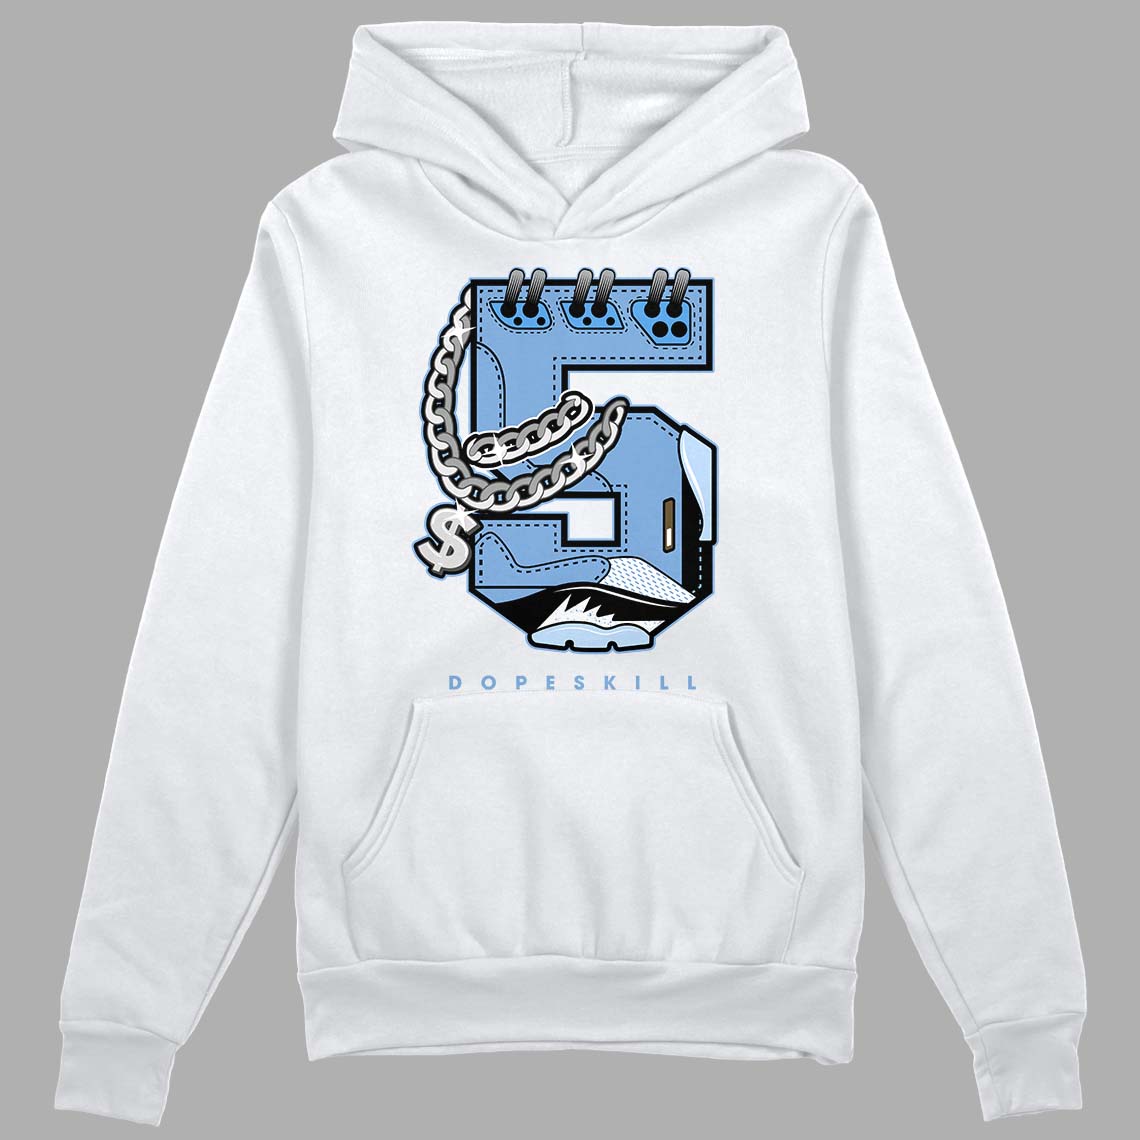 Jordan 5 Retro University Blue DopeSkill Hoodie Sweatshirt No.5 Graphic Streetwear - White